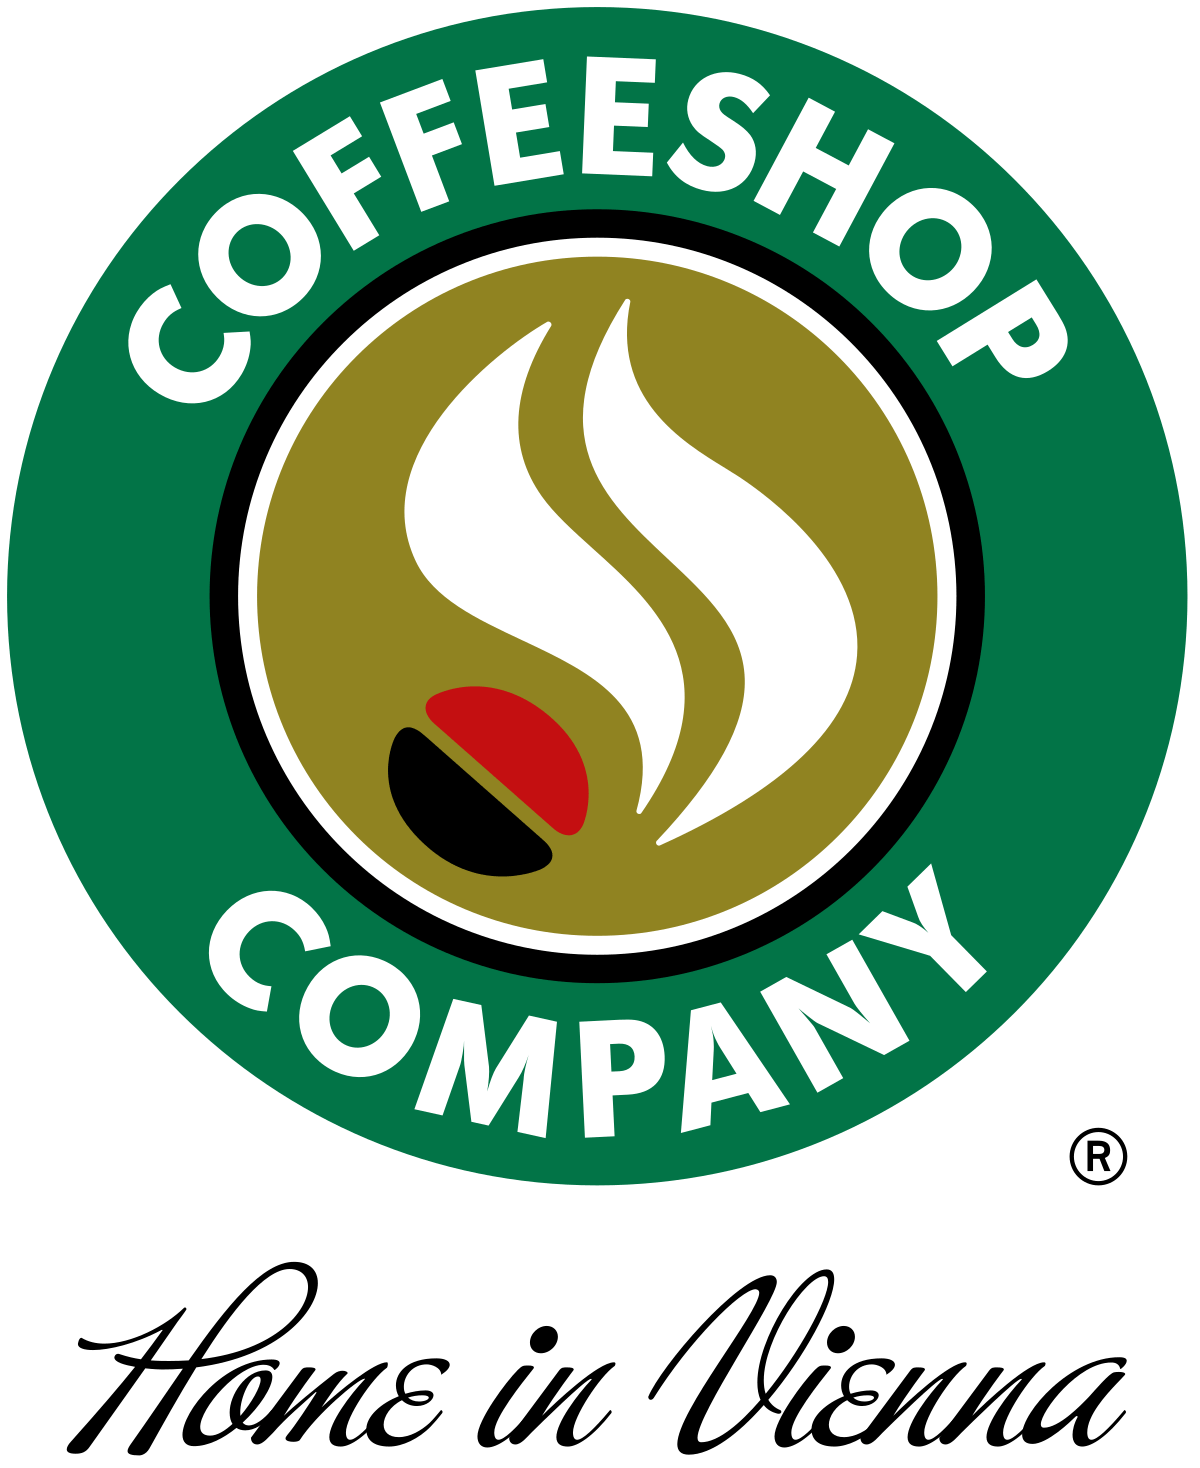 Coffee Company Logo - Coffeeshop Company